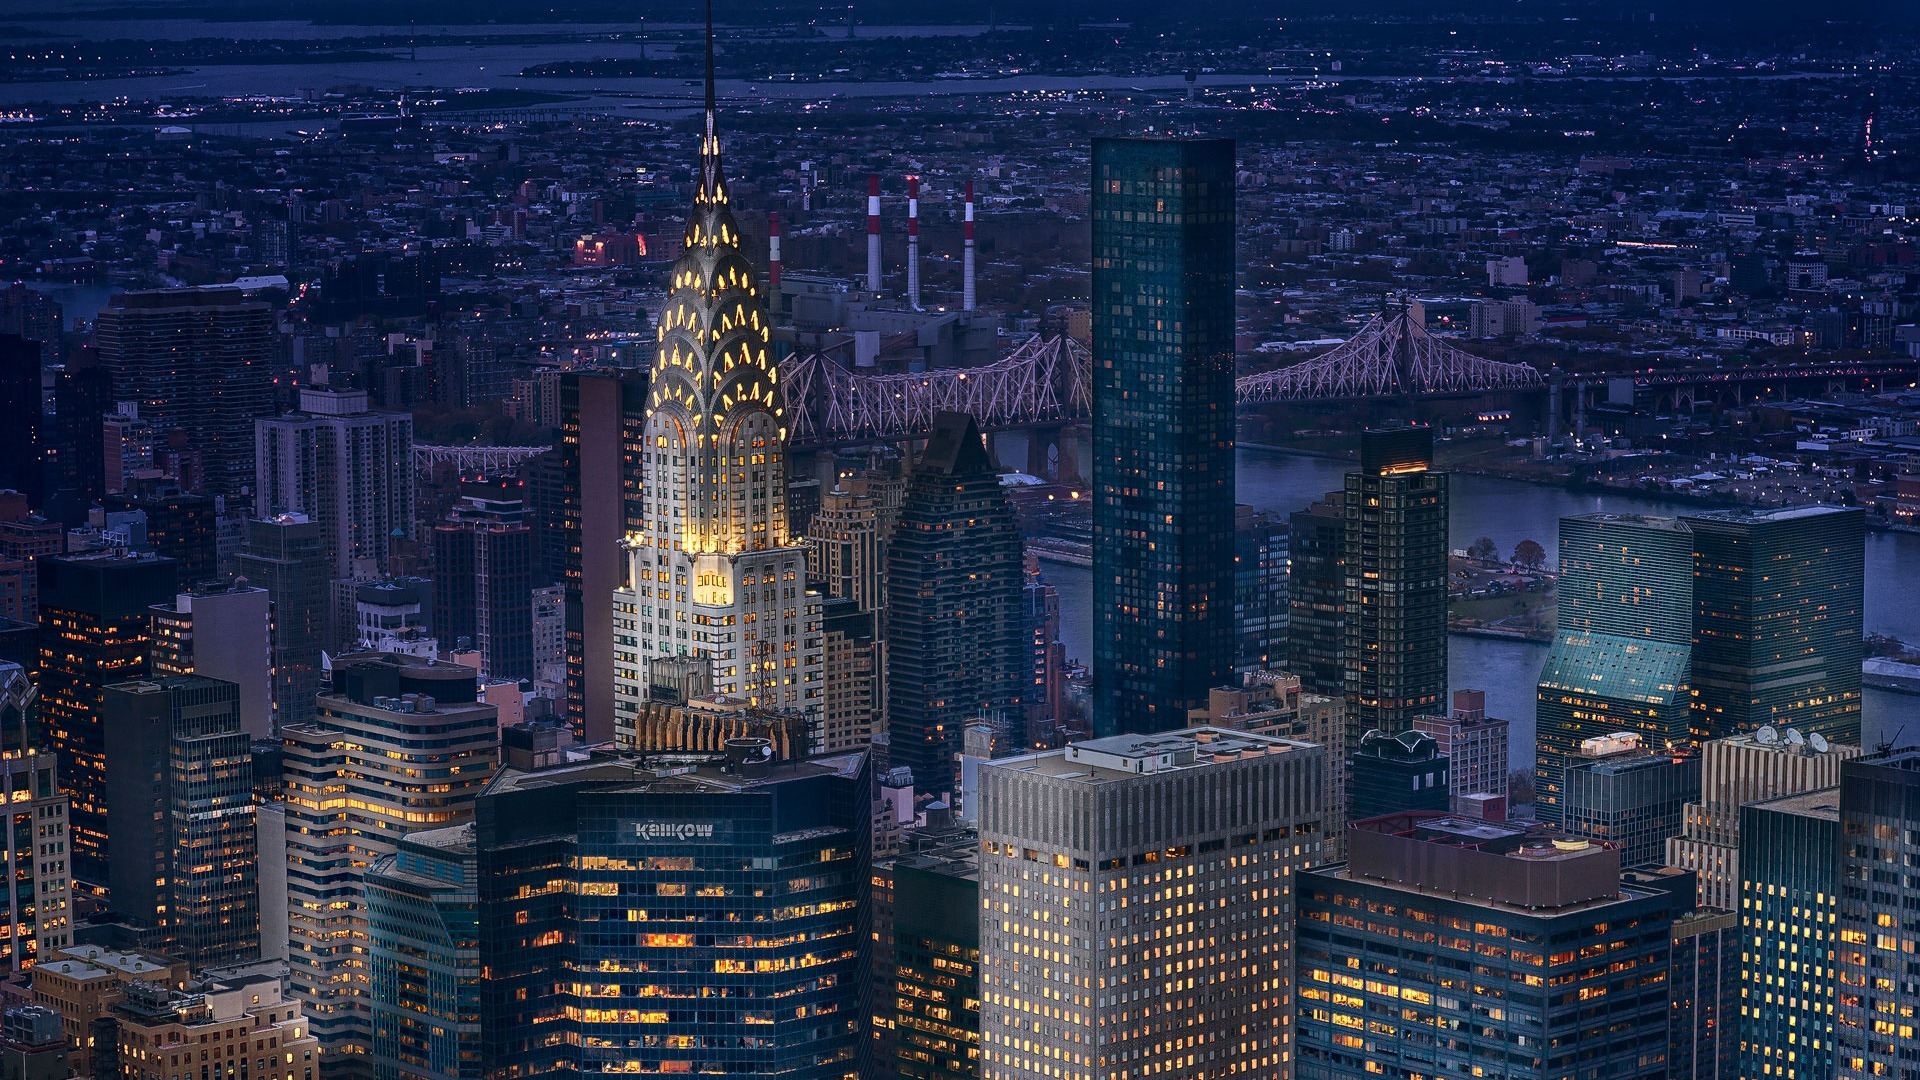 General 1920x1080 architecture building skyscraper cityscape New York City USA Manhattan night bridge lights Chrysler Building